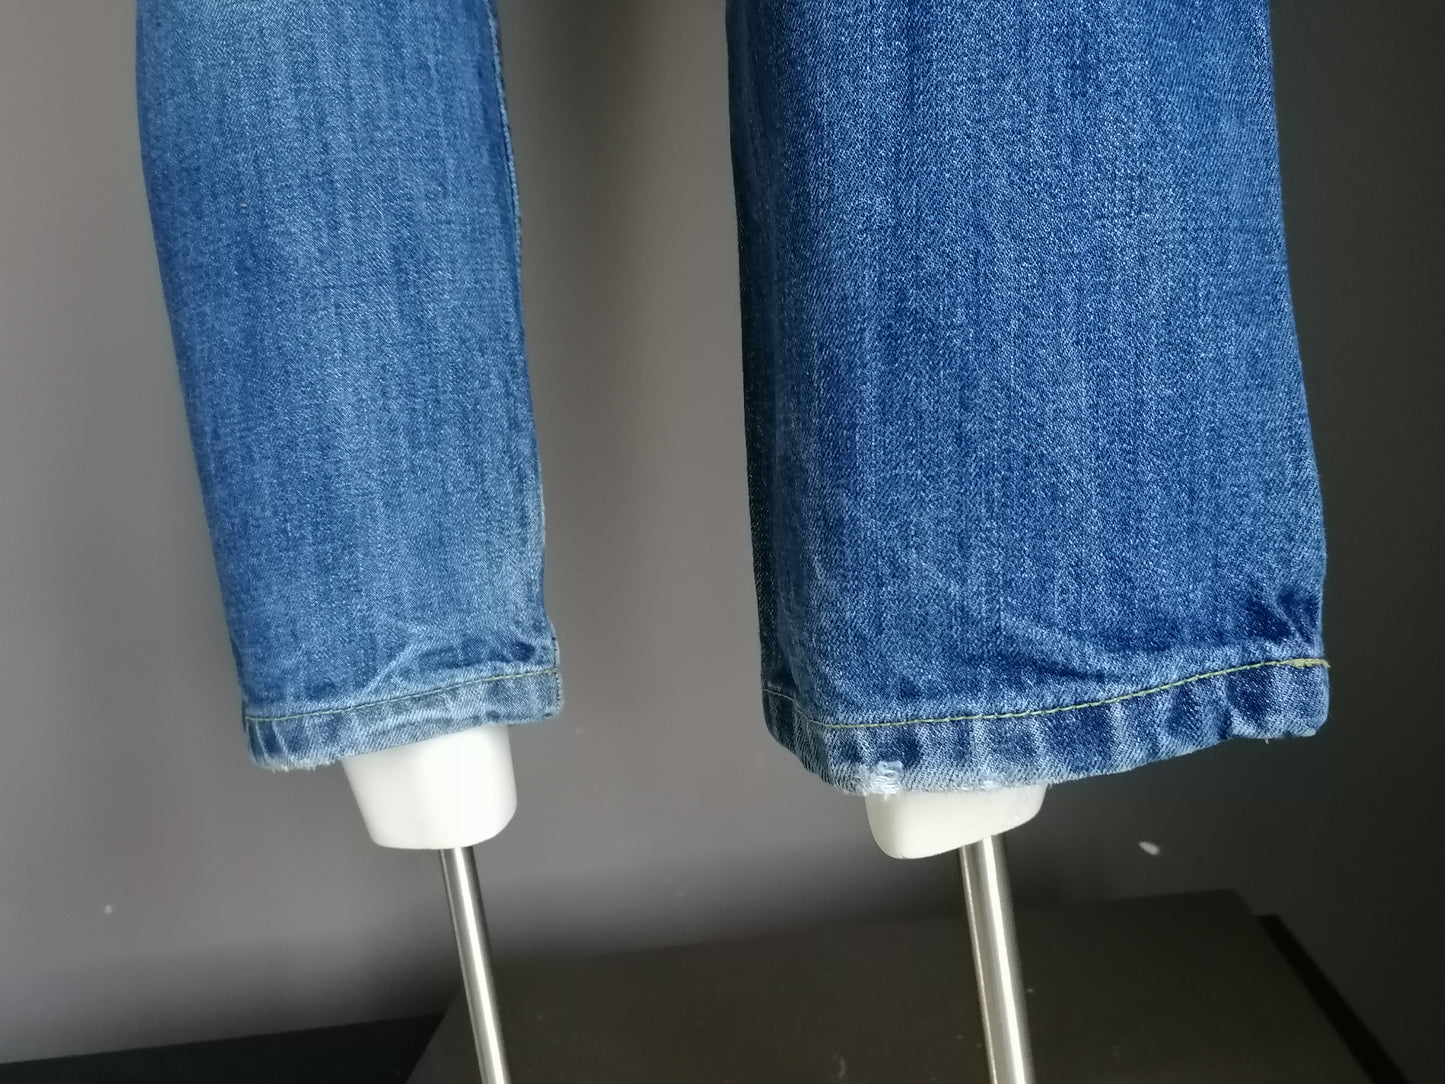 New Look Jeans. Color azul. Tamaño W30 - L30. Pierna recta.